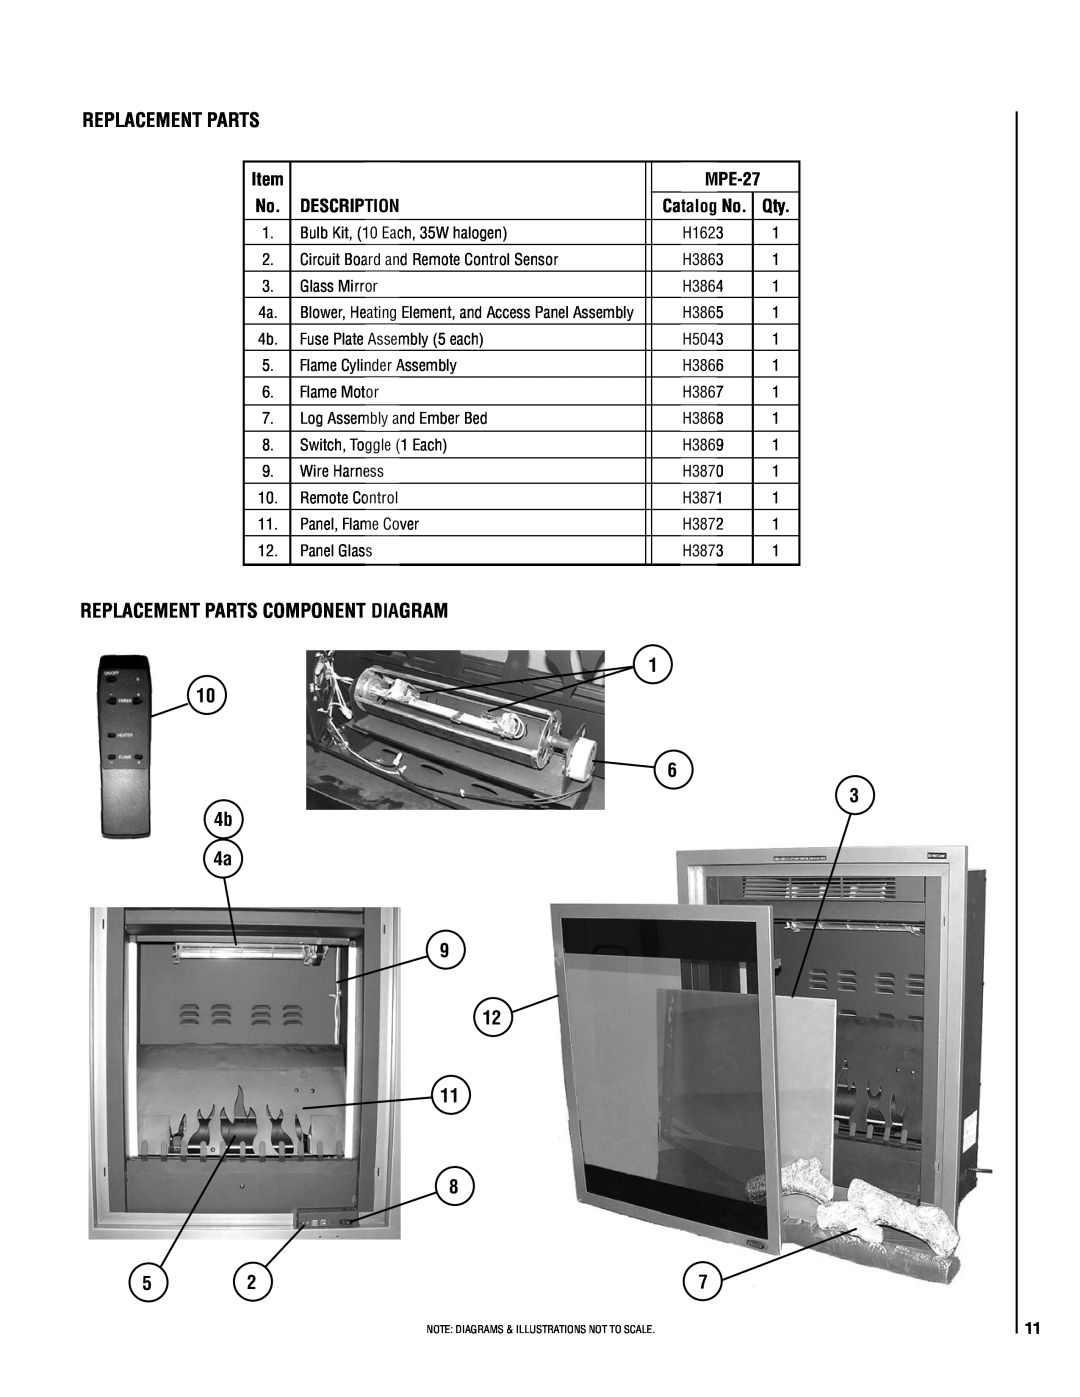 Lennox Hearth MPE-27 warranty Replacement Parts COMPONENT DIAGRAM, 1 10 6 3 4b 4a, Description 